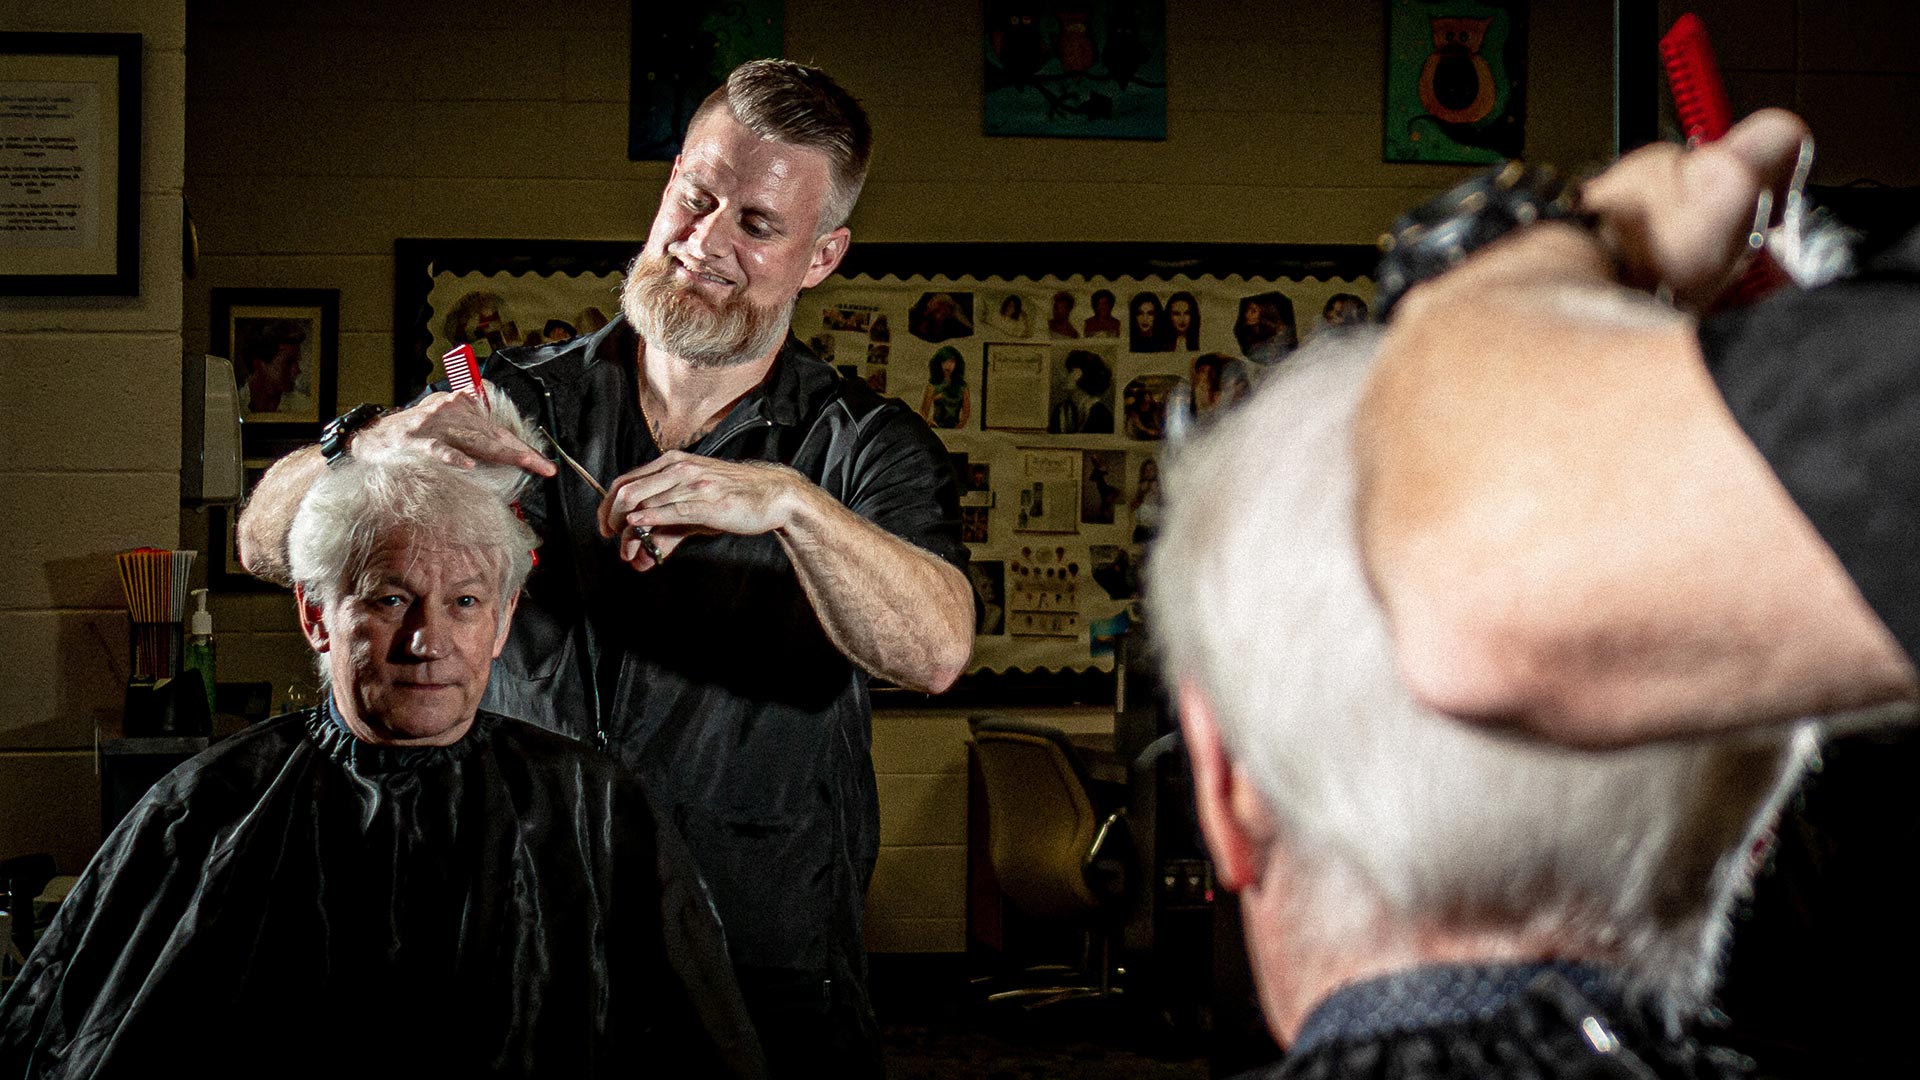 Male student cutting older gentleman's hair